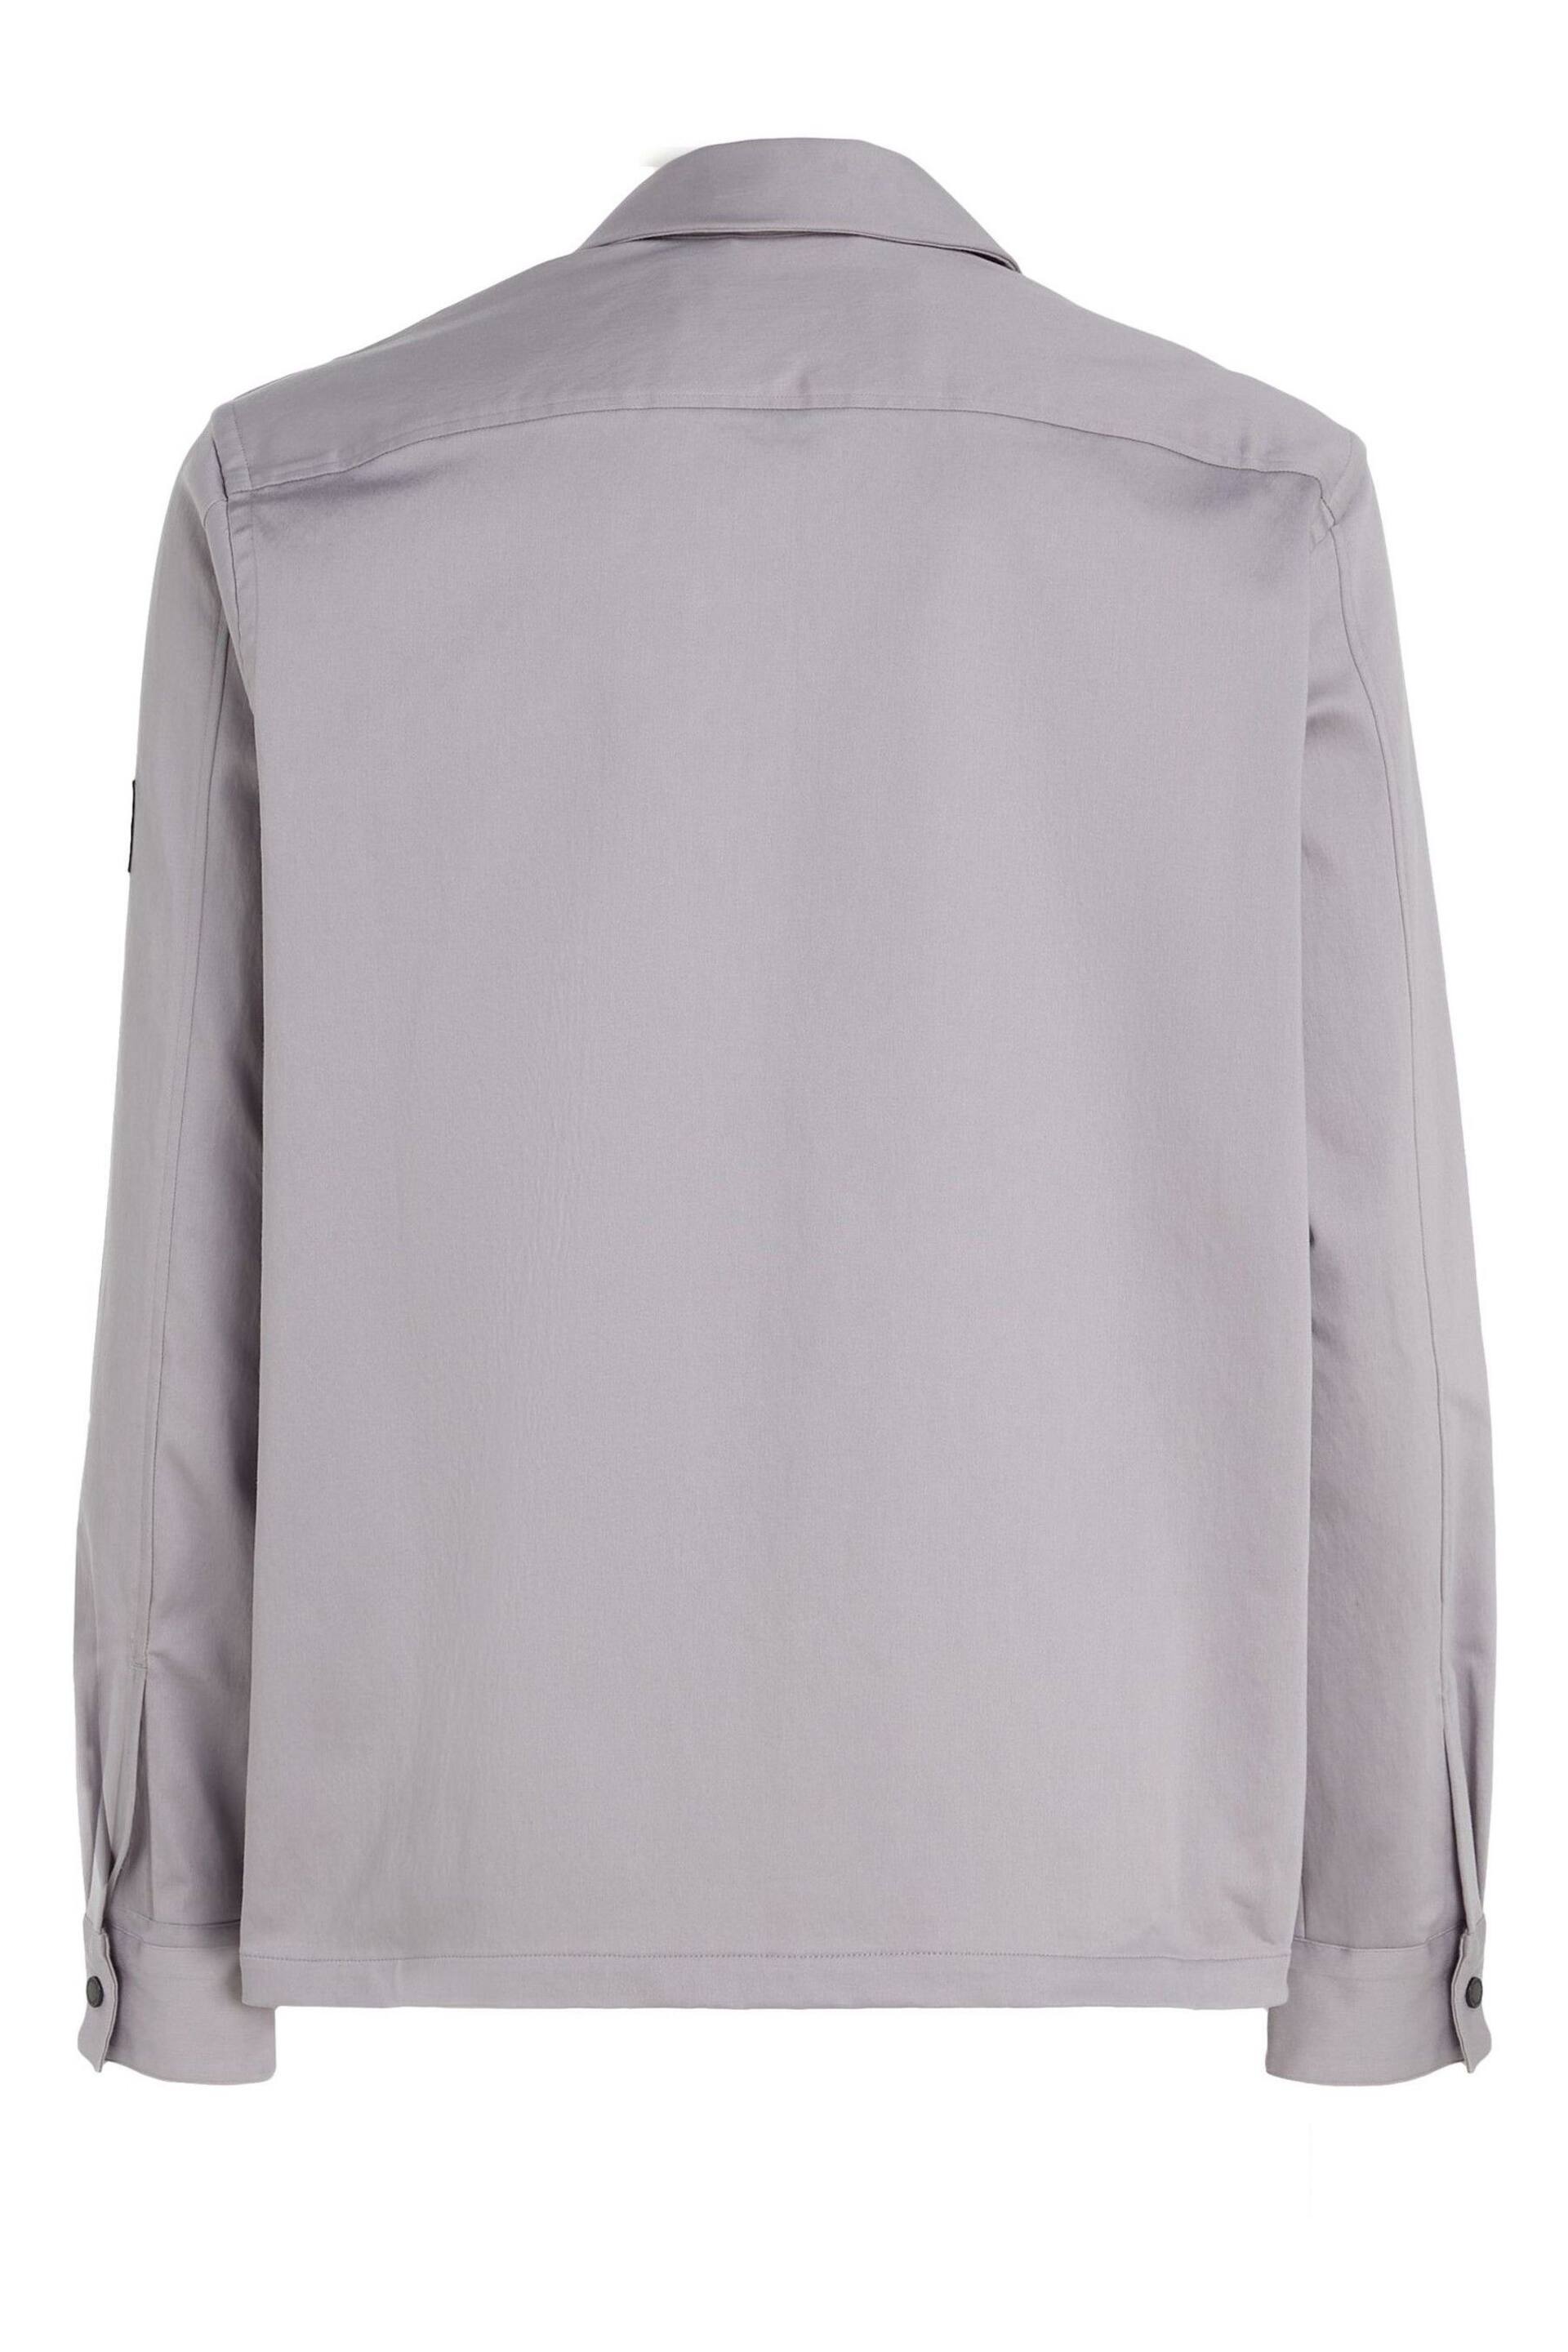 Calvin Klein Grey 3D Pocket Overshirt - Image 5 of 6